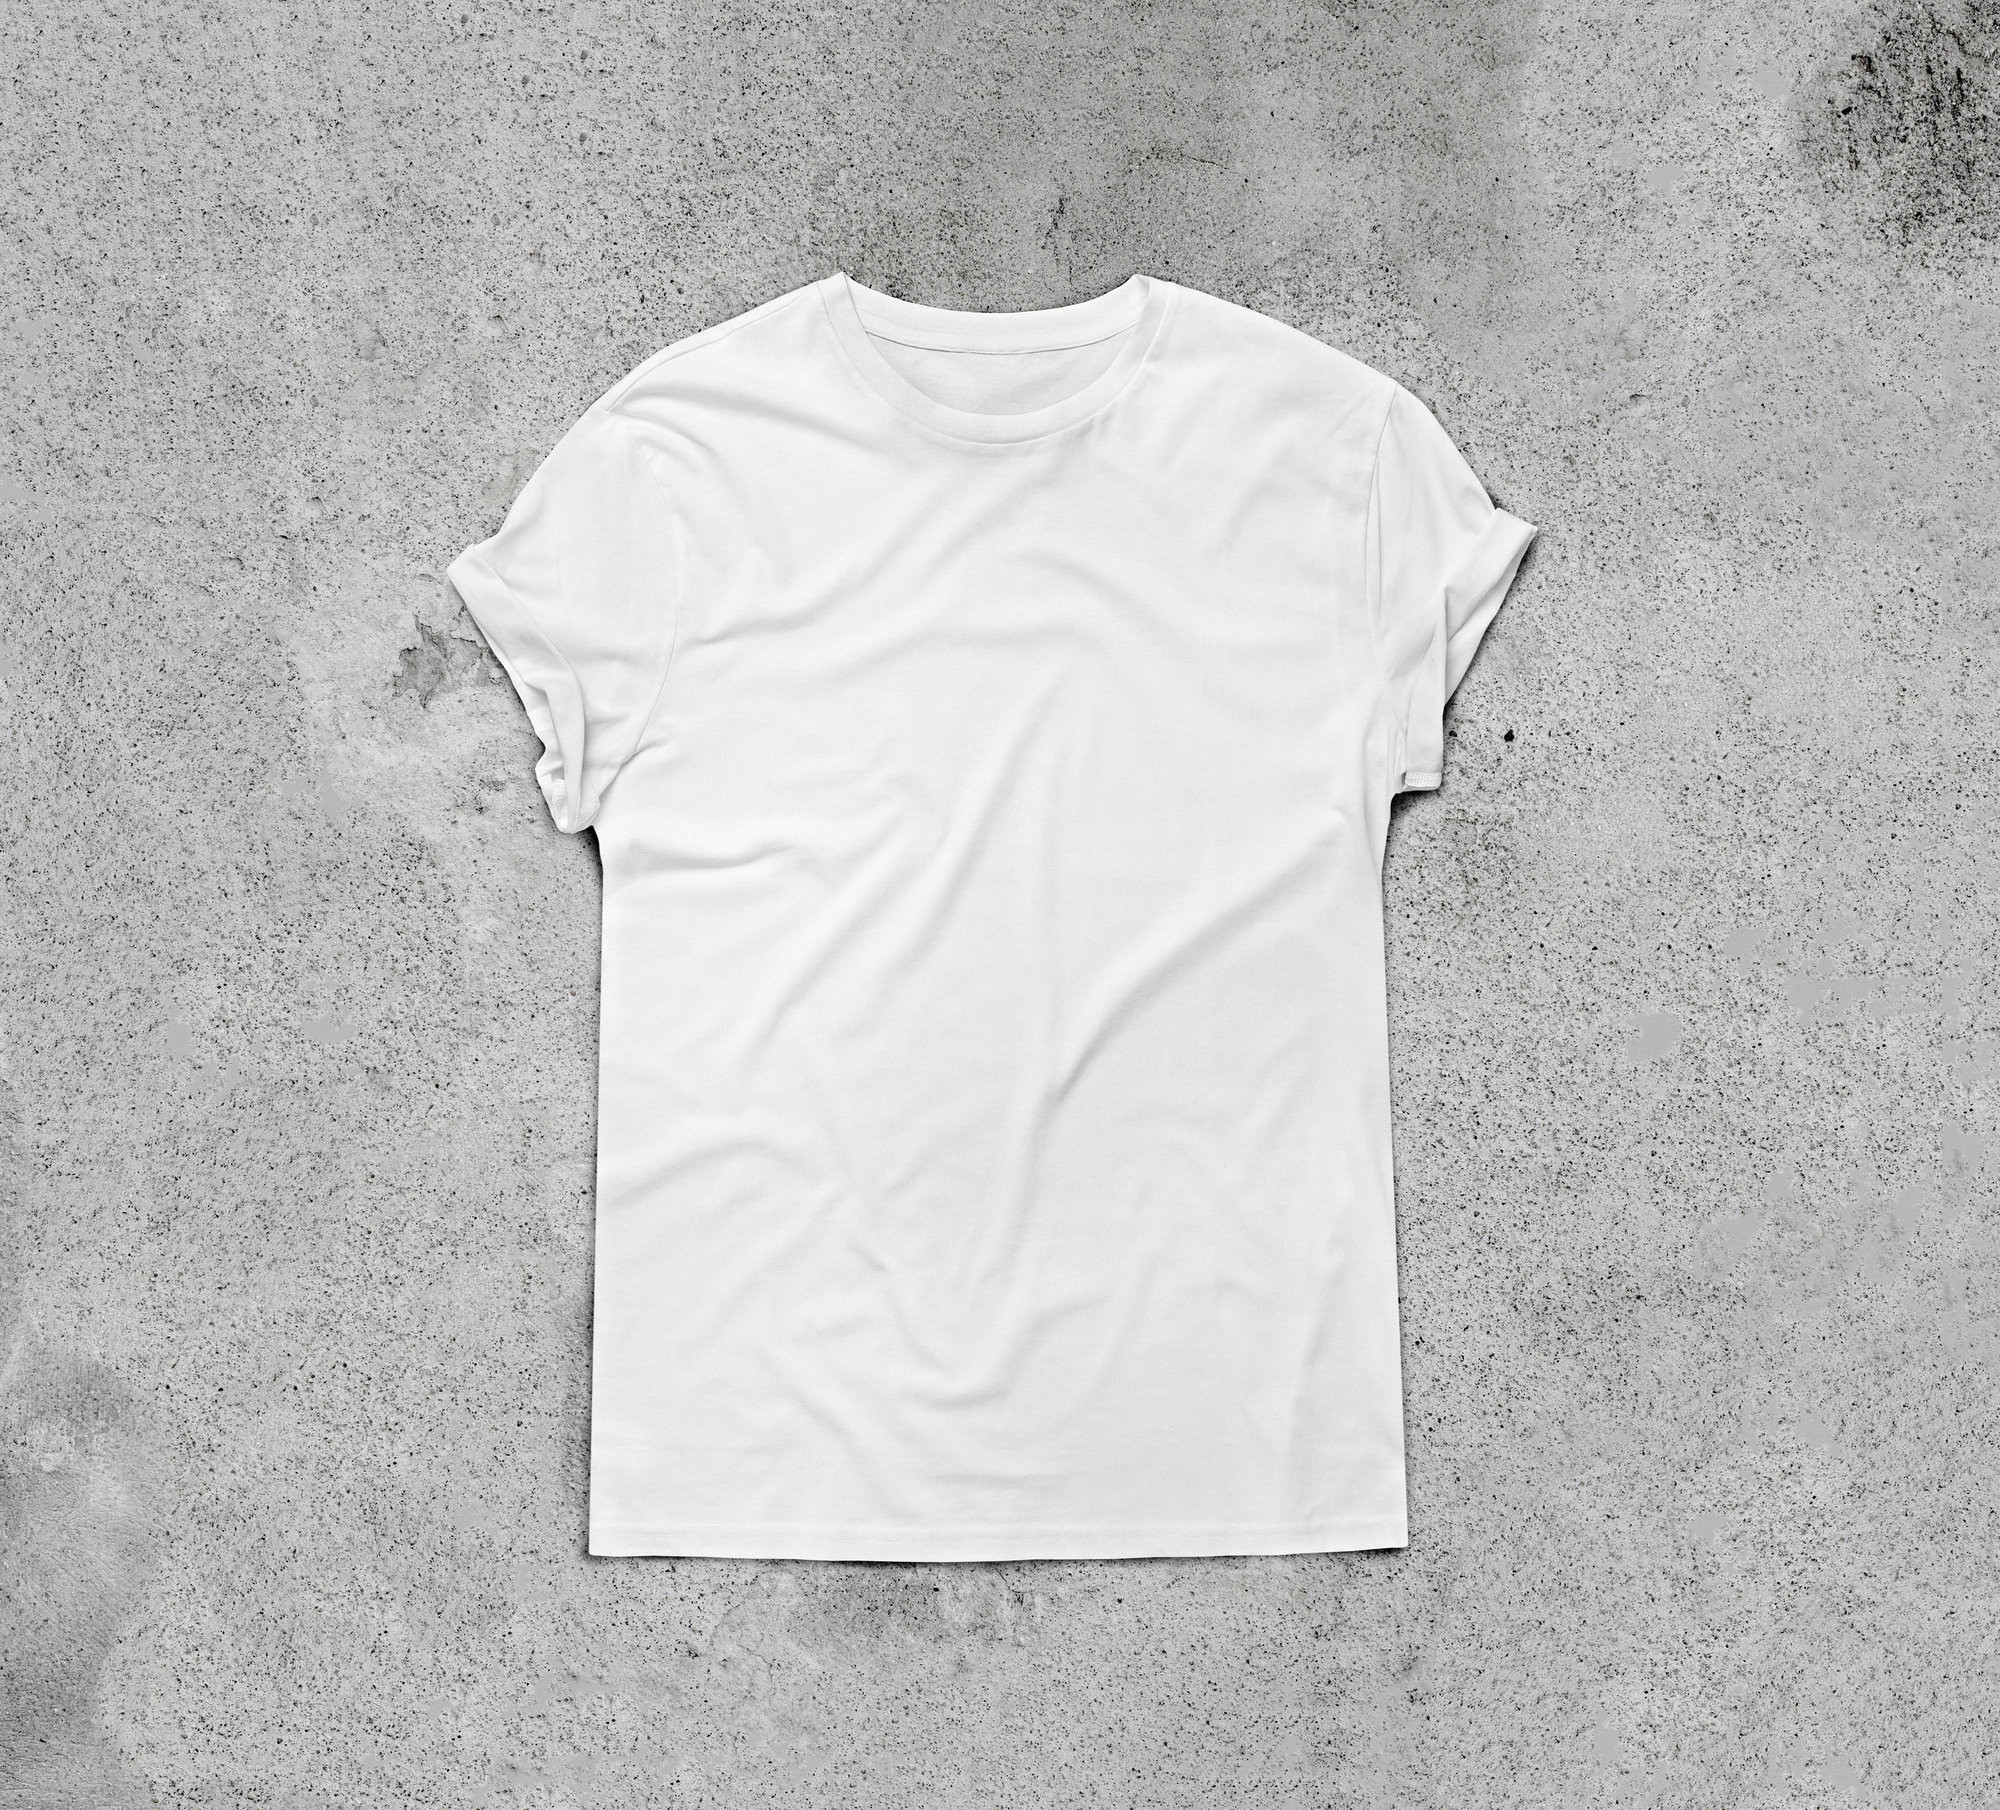 Unknown designer. White T-shirt. Cotton. 29 x 35 1/2" (73.7 x 90.2 cm) (irreg). Gift of the manufacturer. Image courtesy Shutterstock/SFIO CRACHO 2017